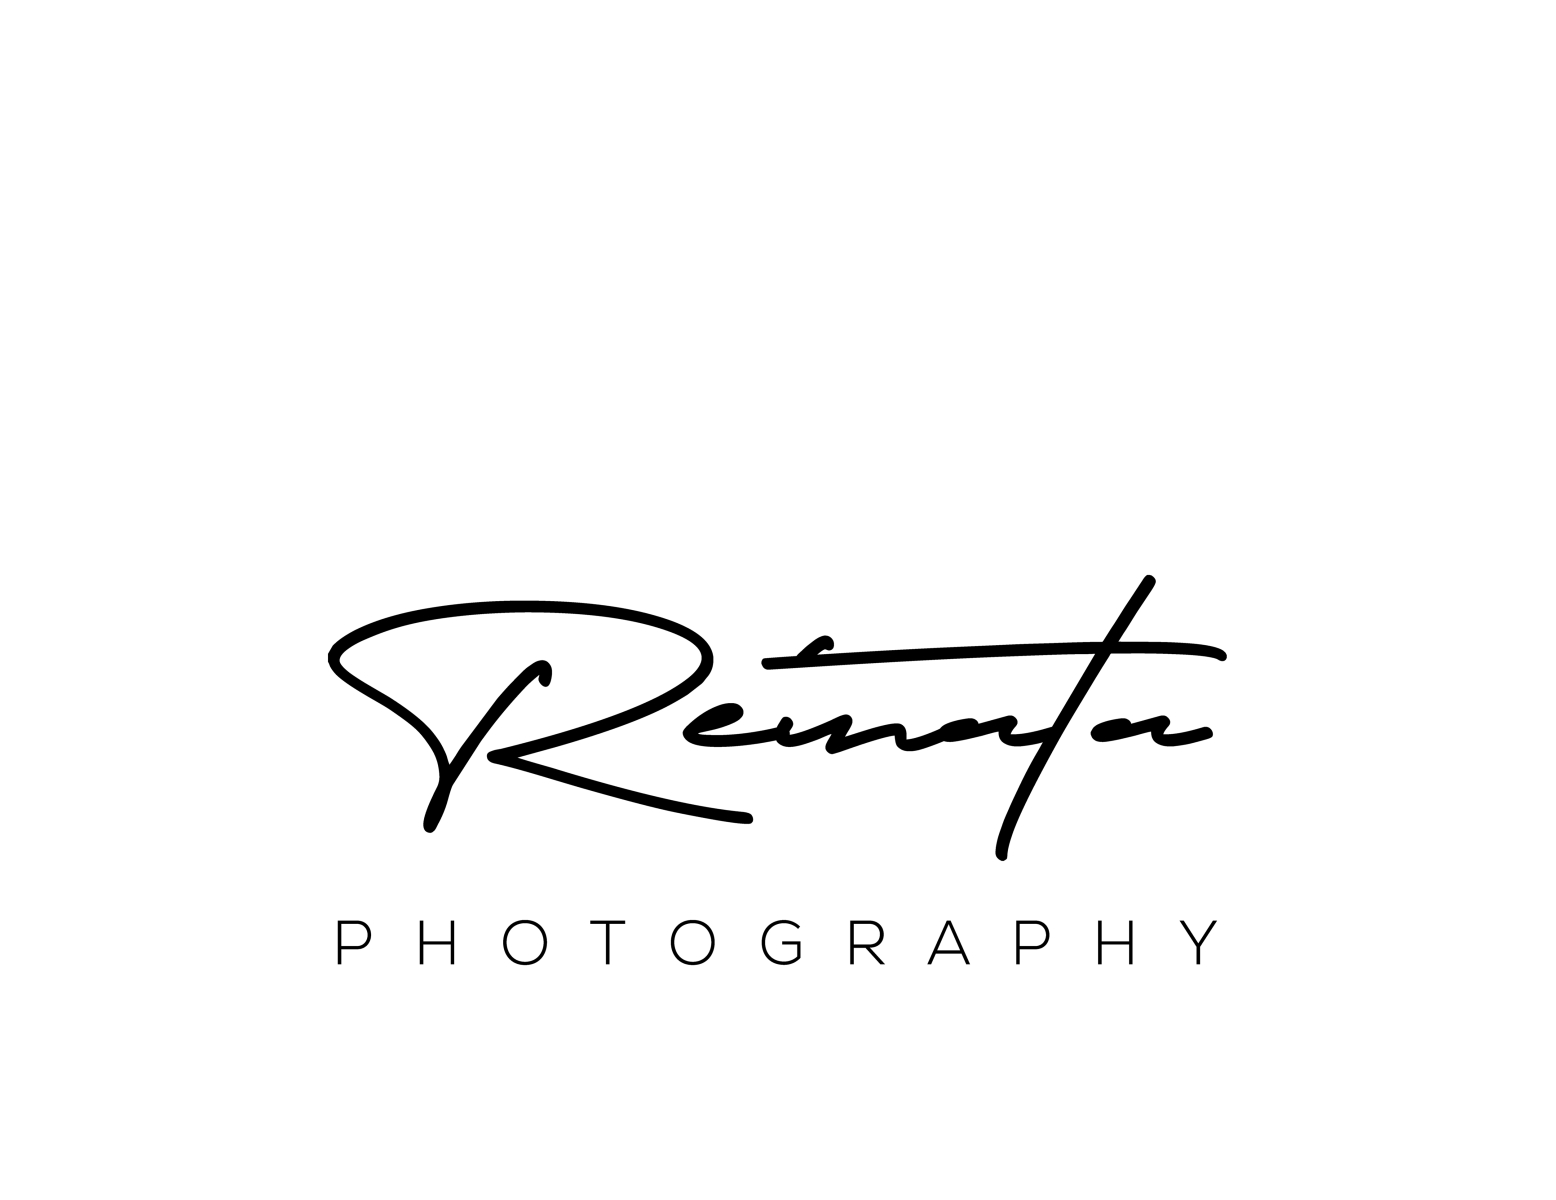 RG photography - YouTube